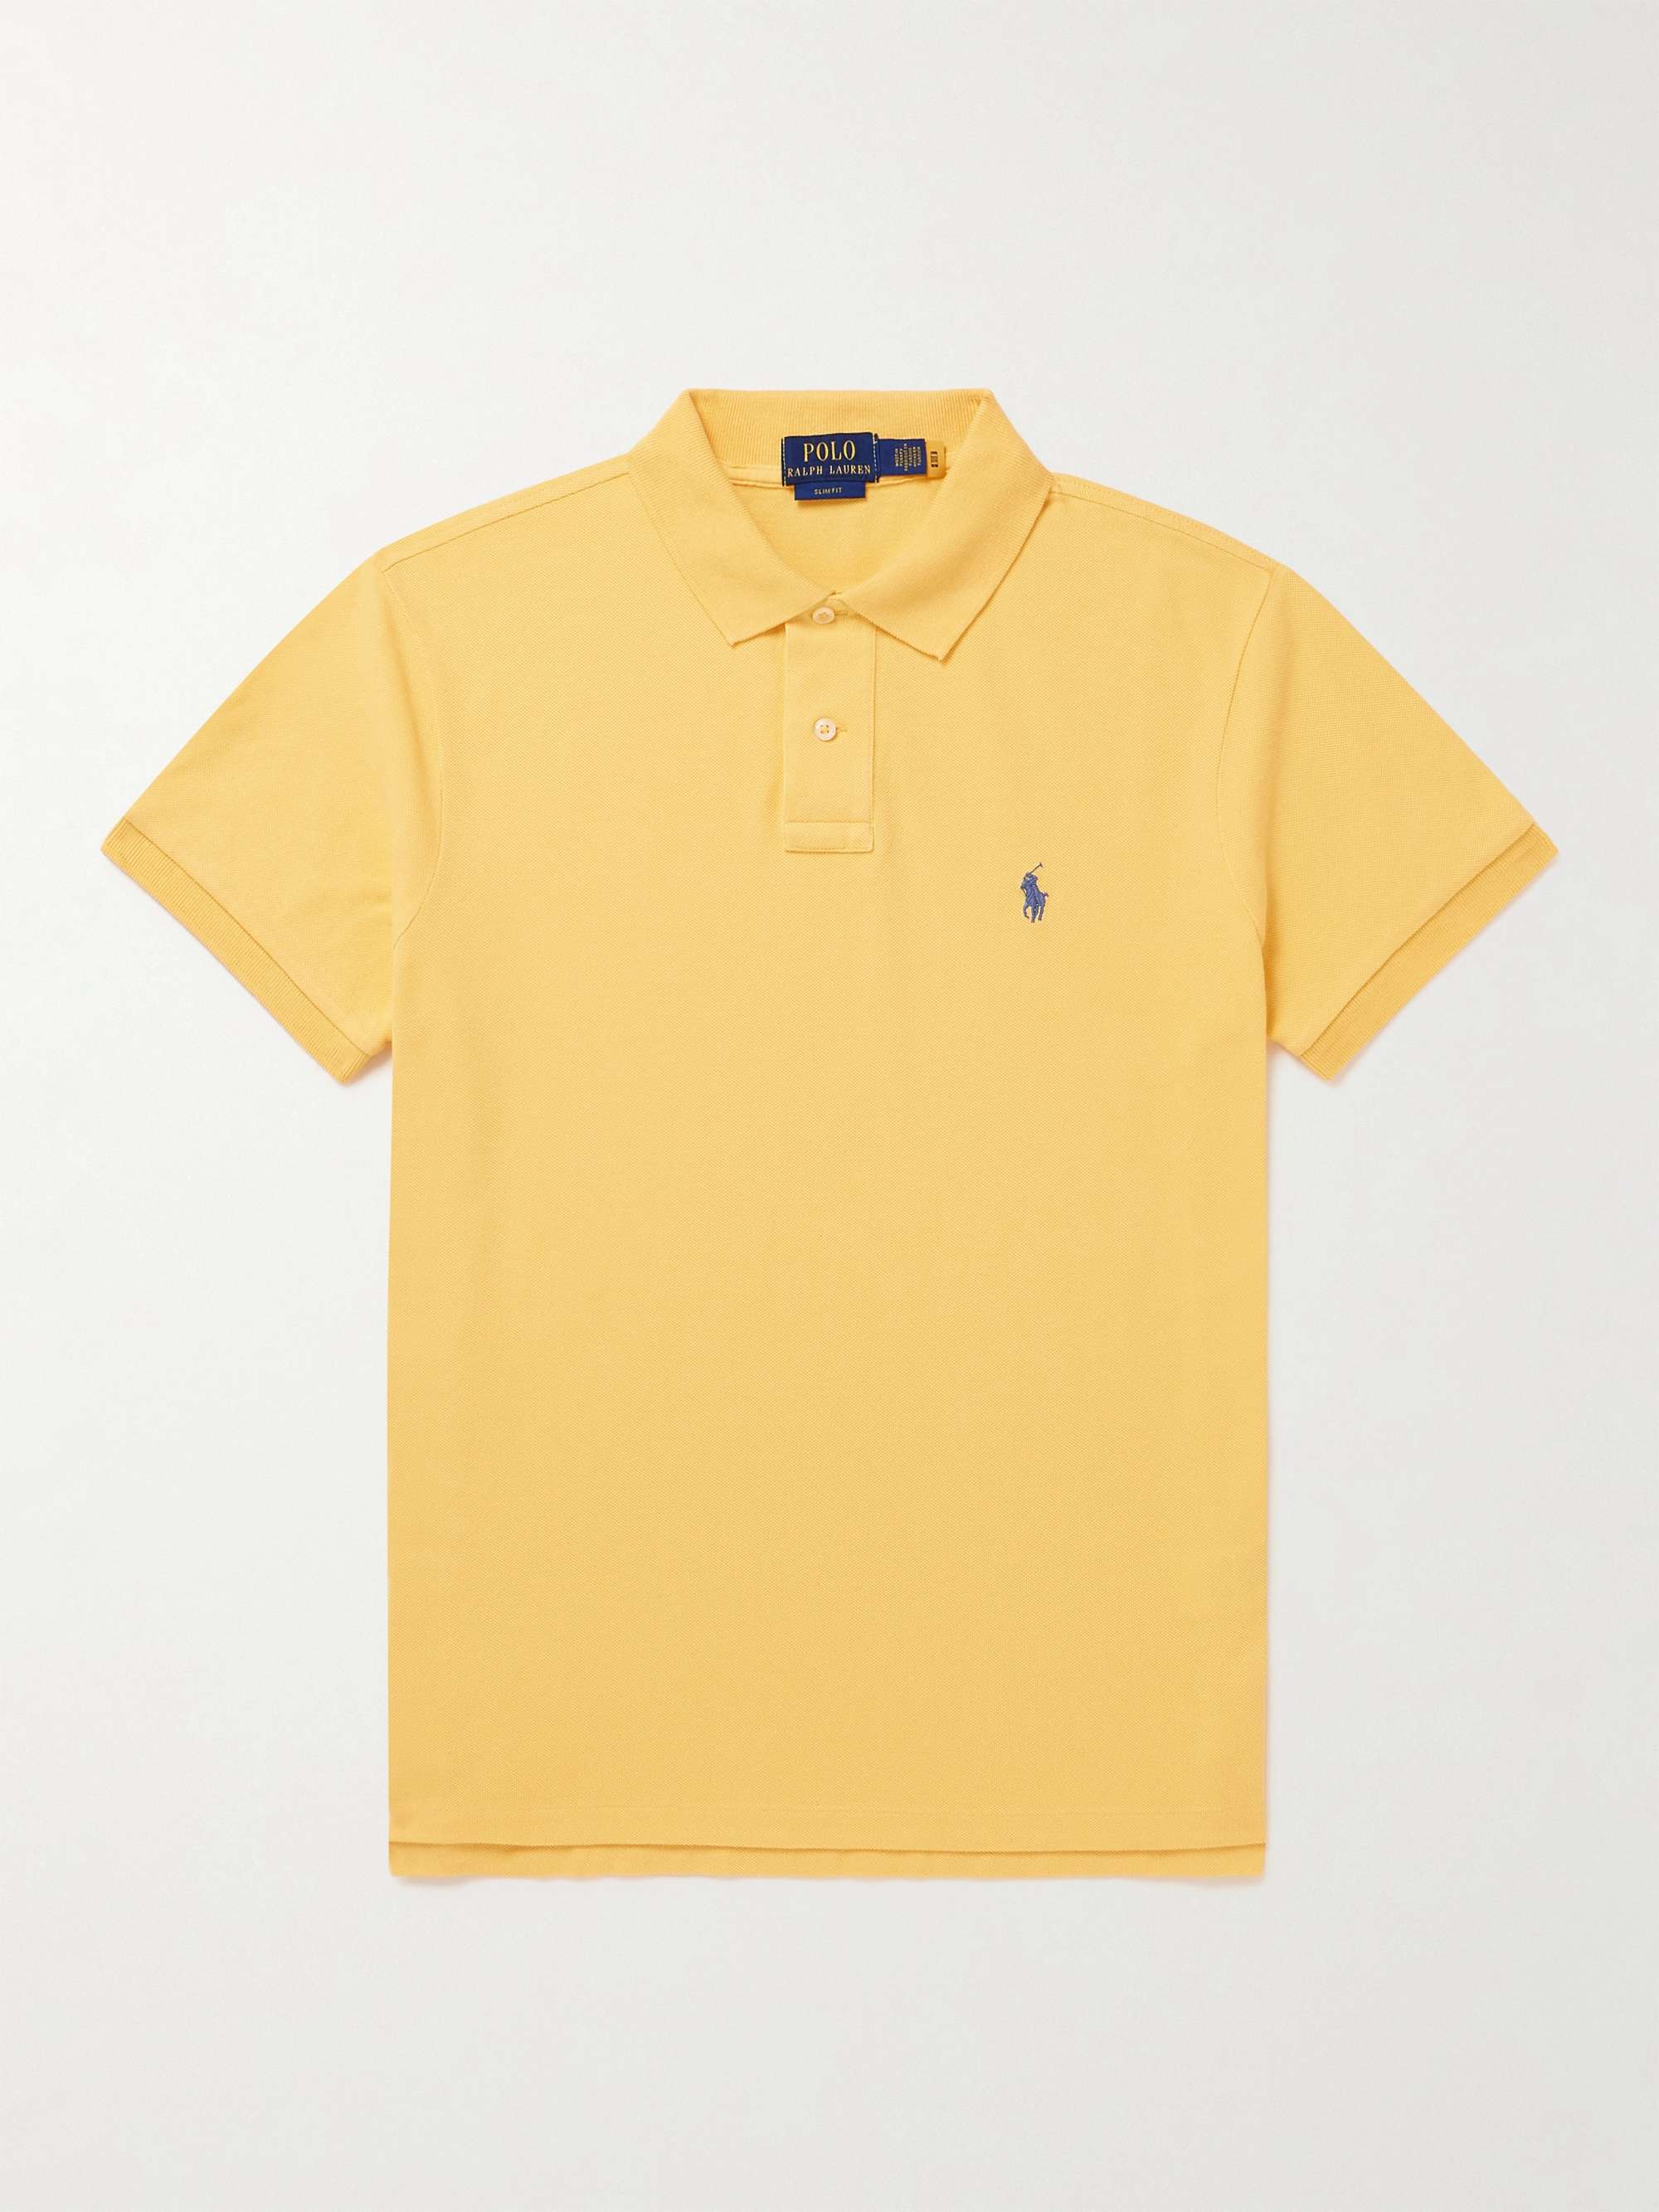 POLO RALPH LAUREN Slim-Fit Logo-Embroidered Cotton-Piqué Polo Shirt for Men  | MR PORTER